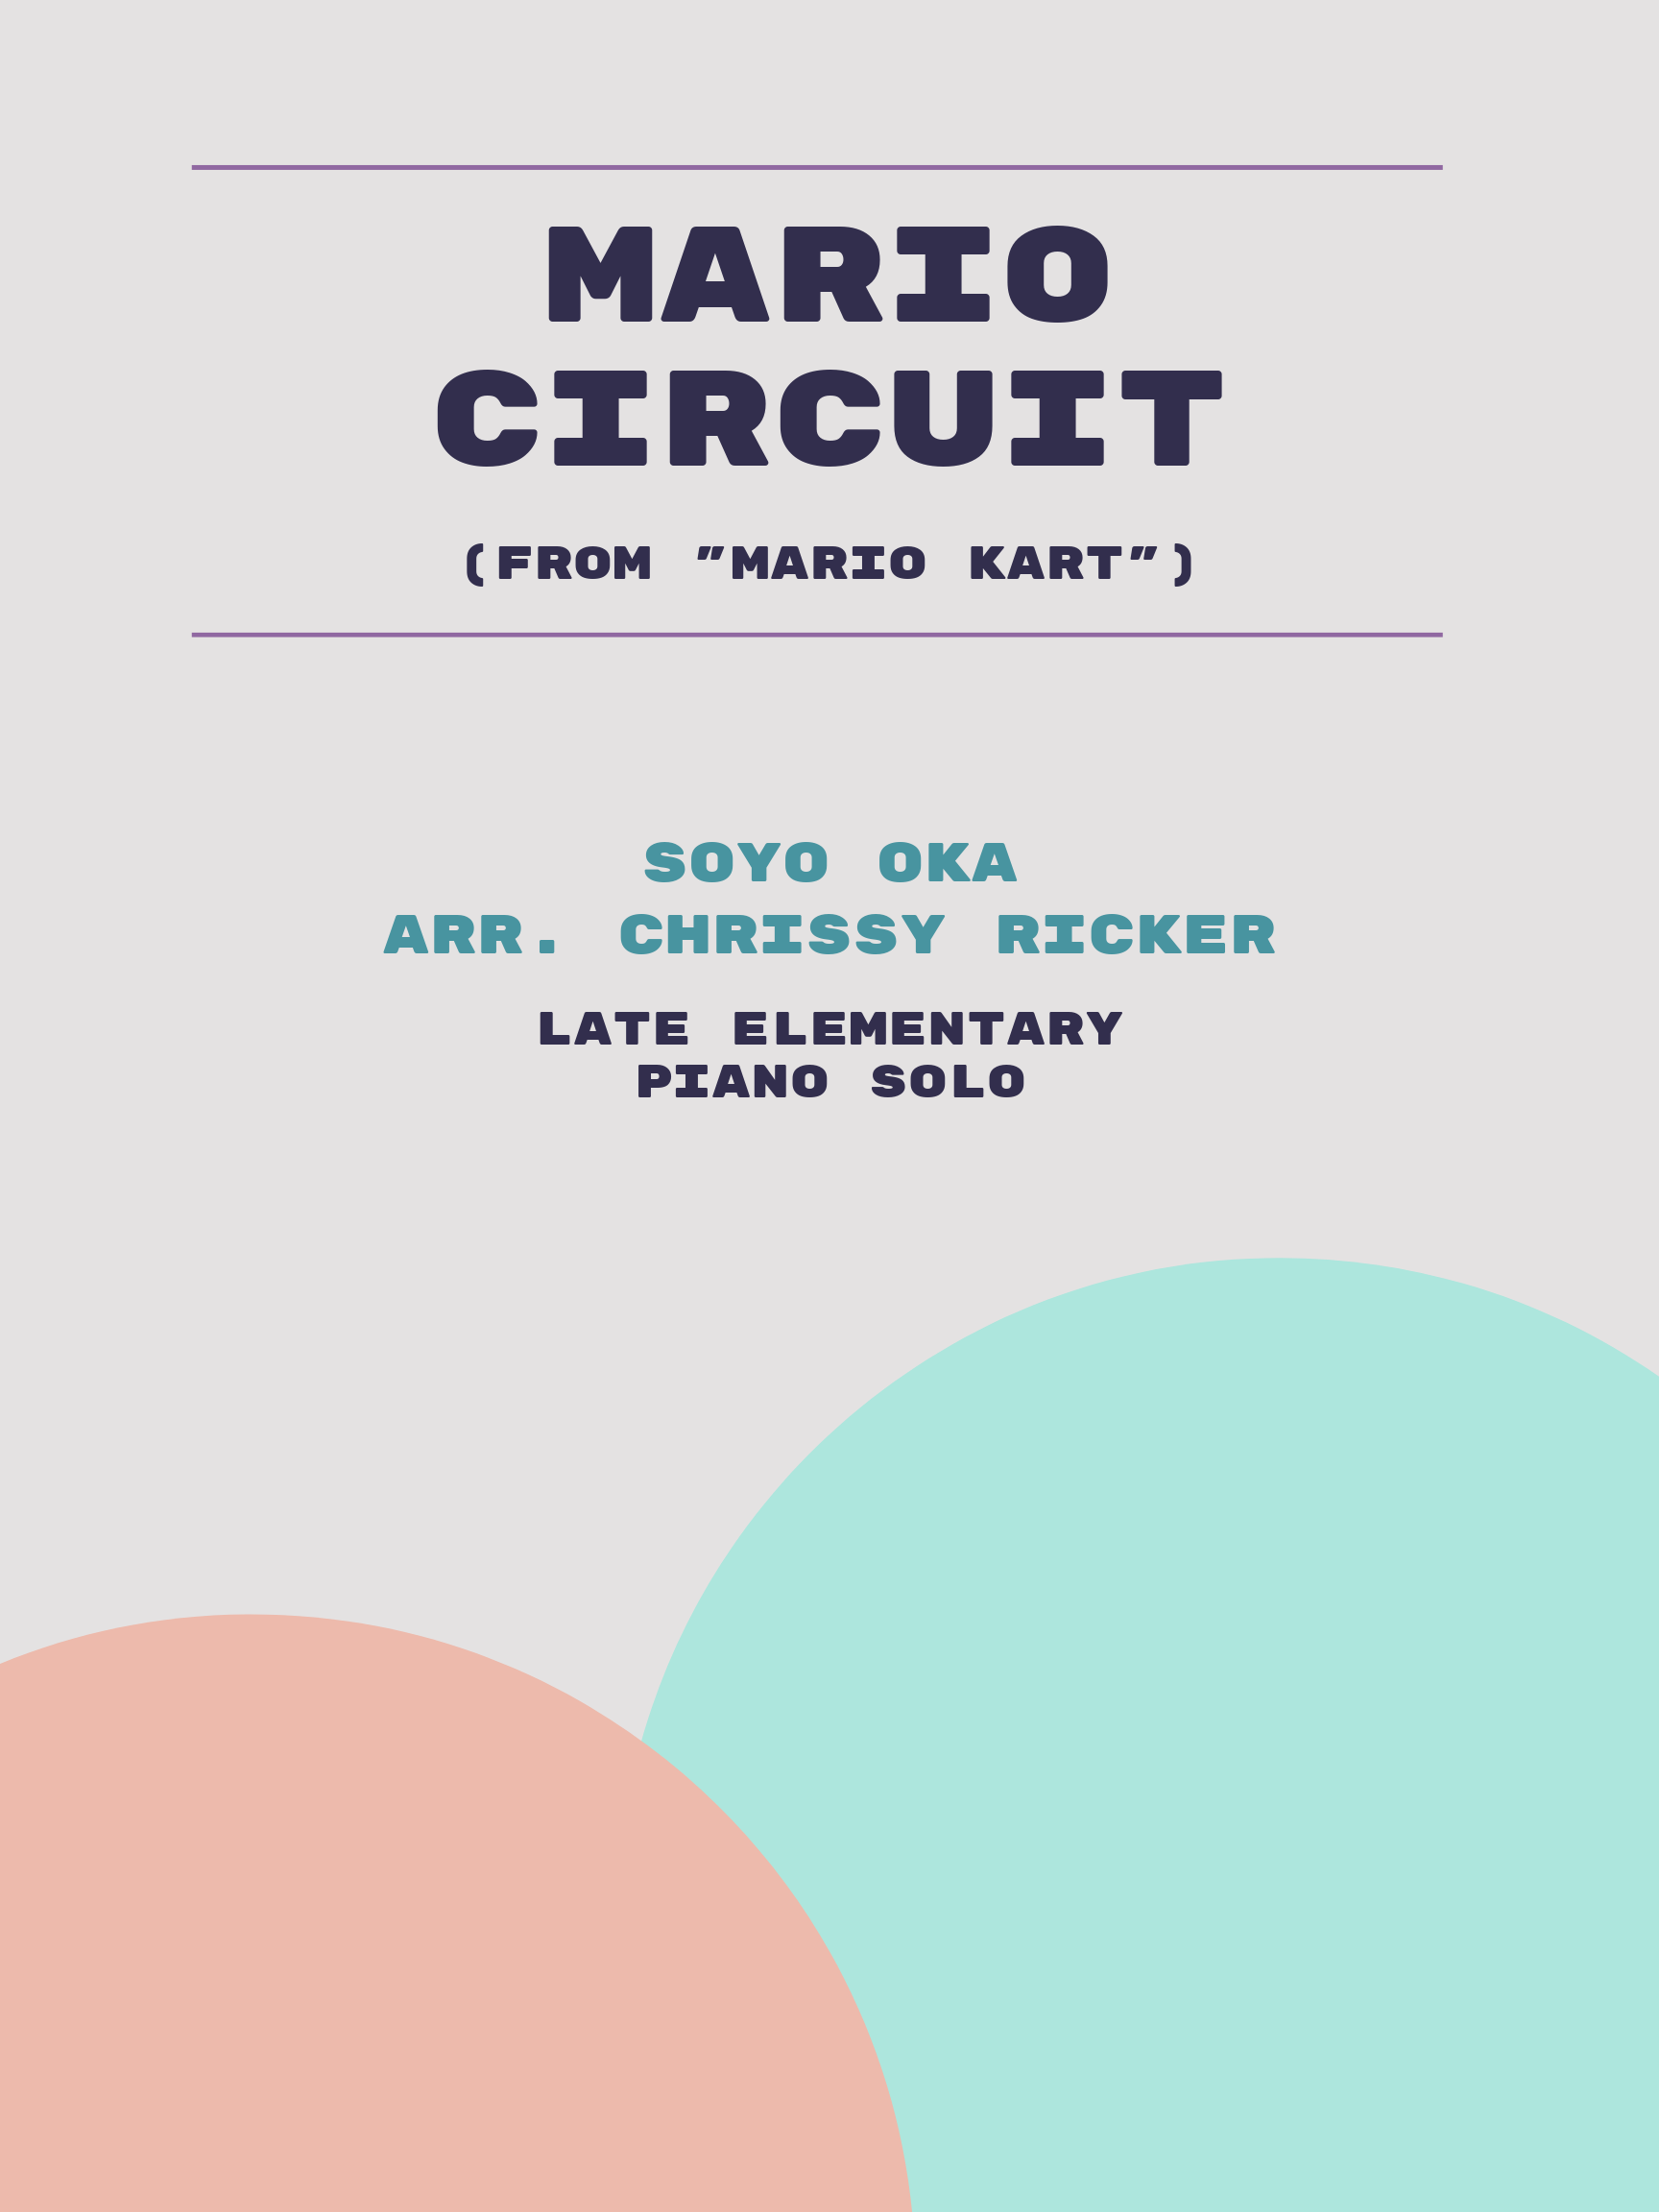 Mario Circuit by Soyo Oka